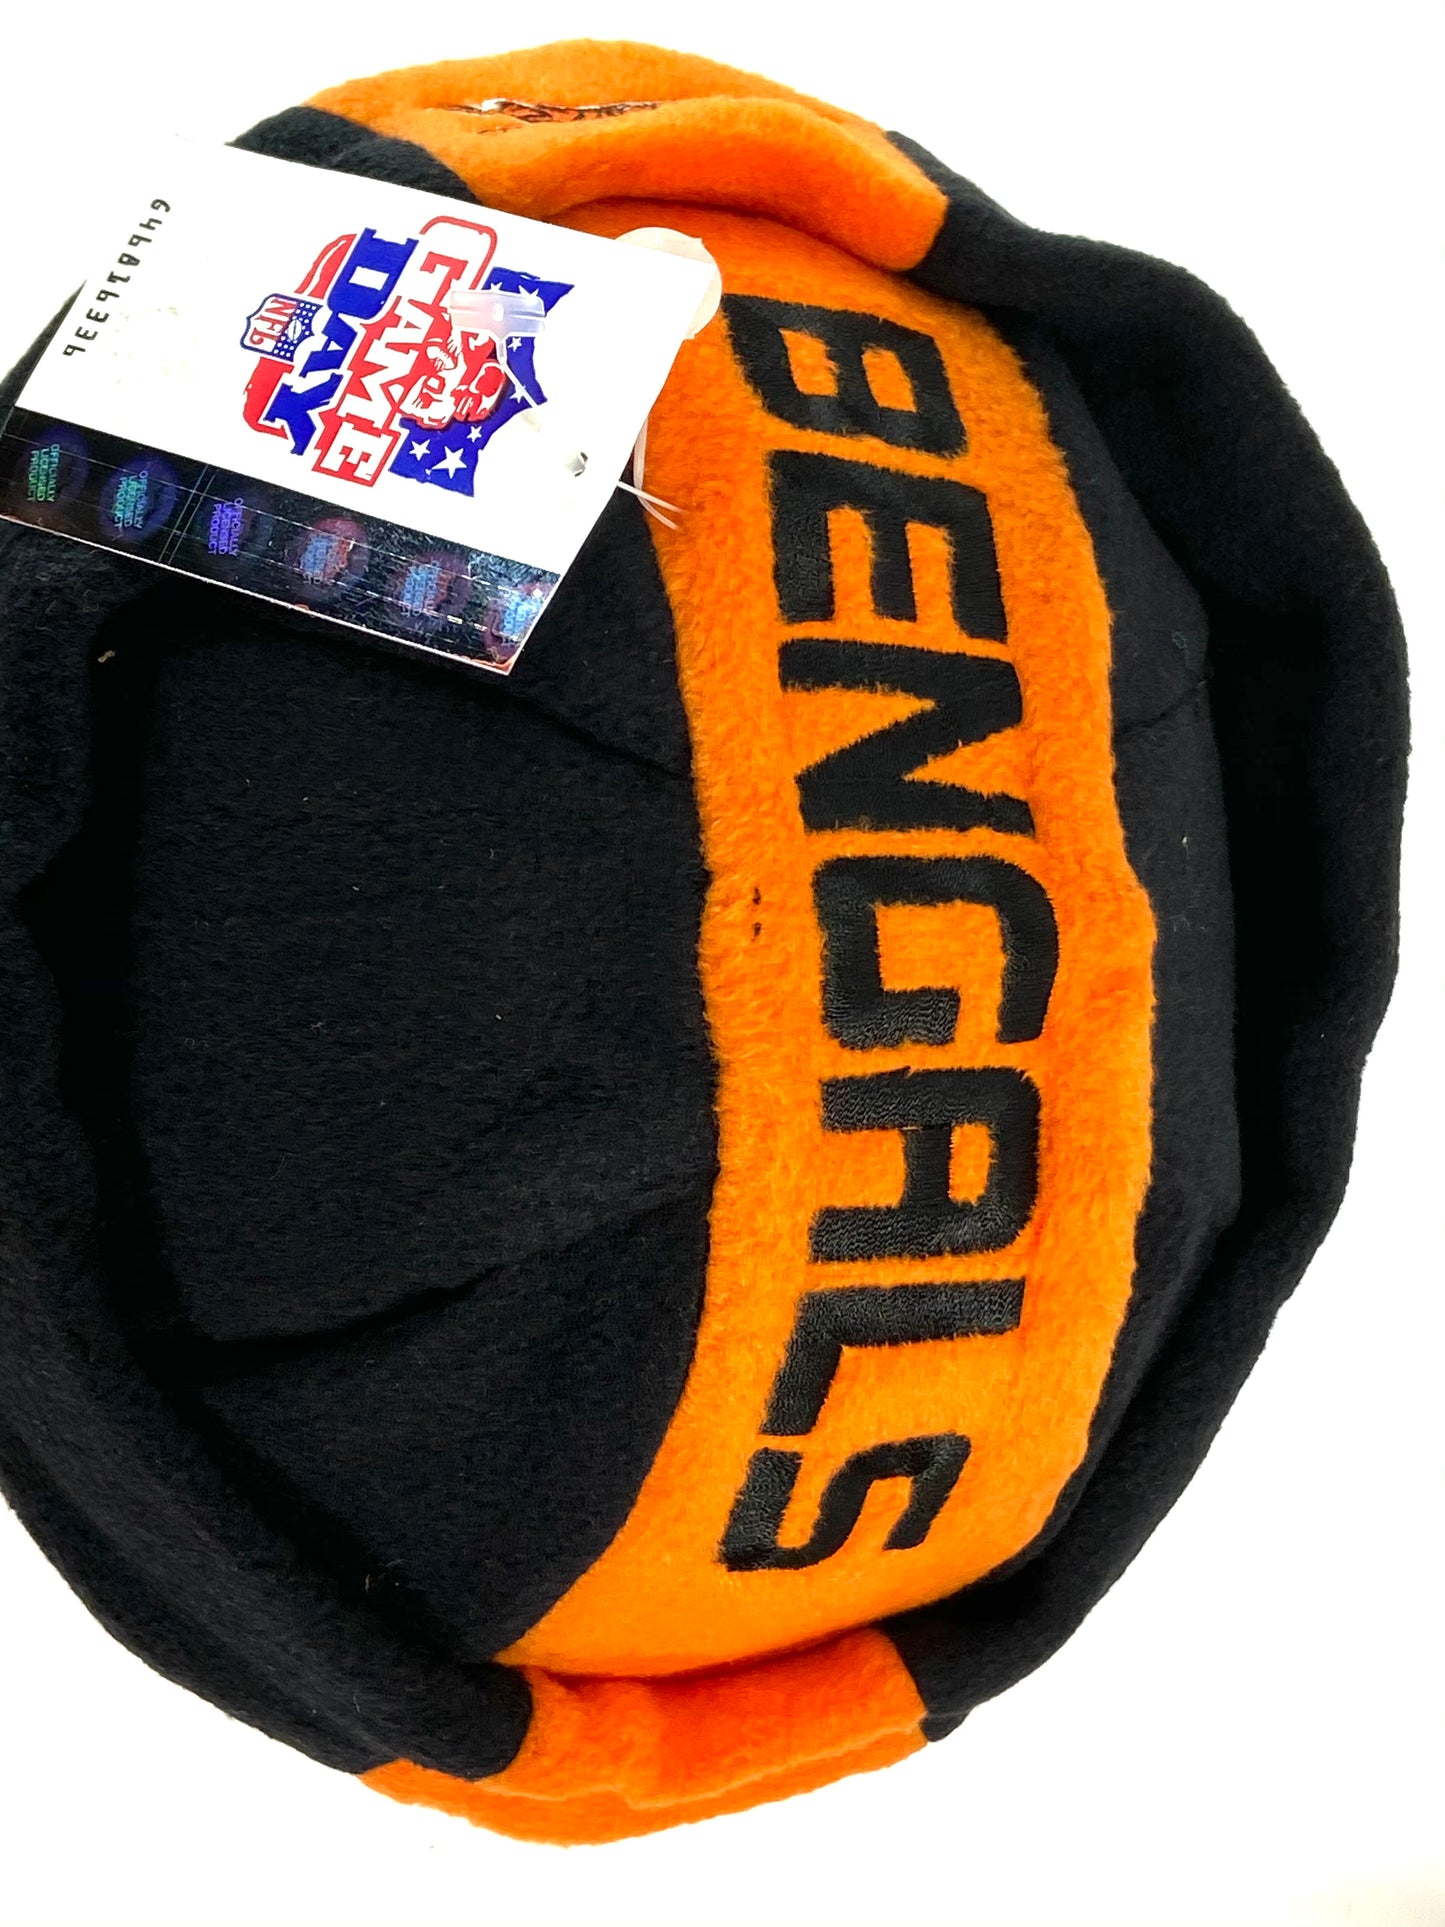 Cincinnati Bengals NFL Fleece "Jughead" Style Beanie By Drew Pearson Marketing